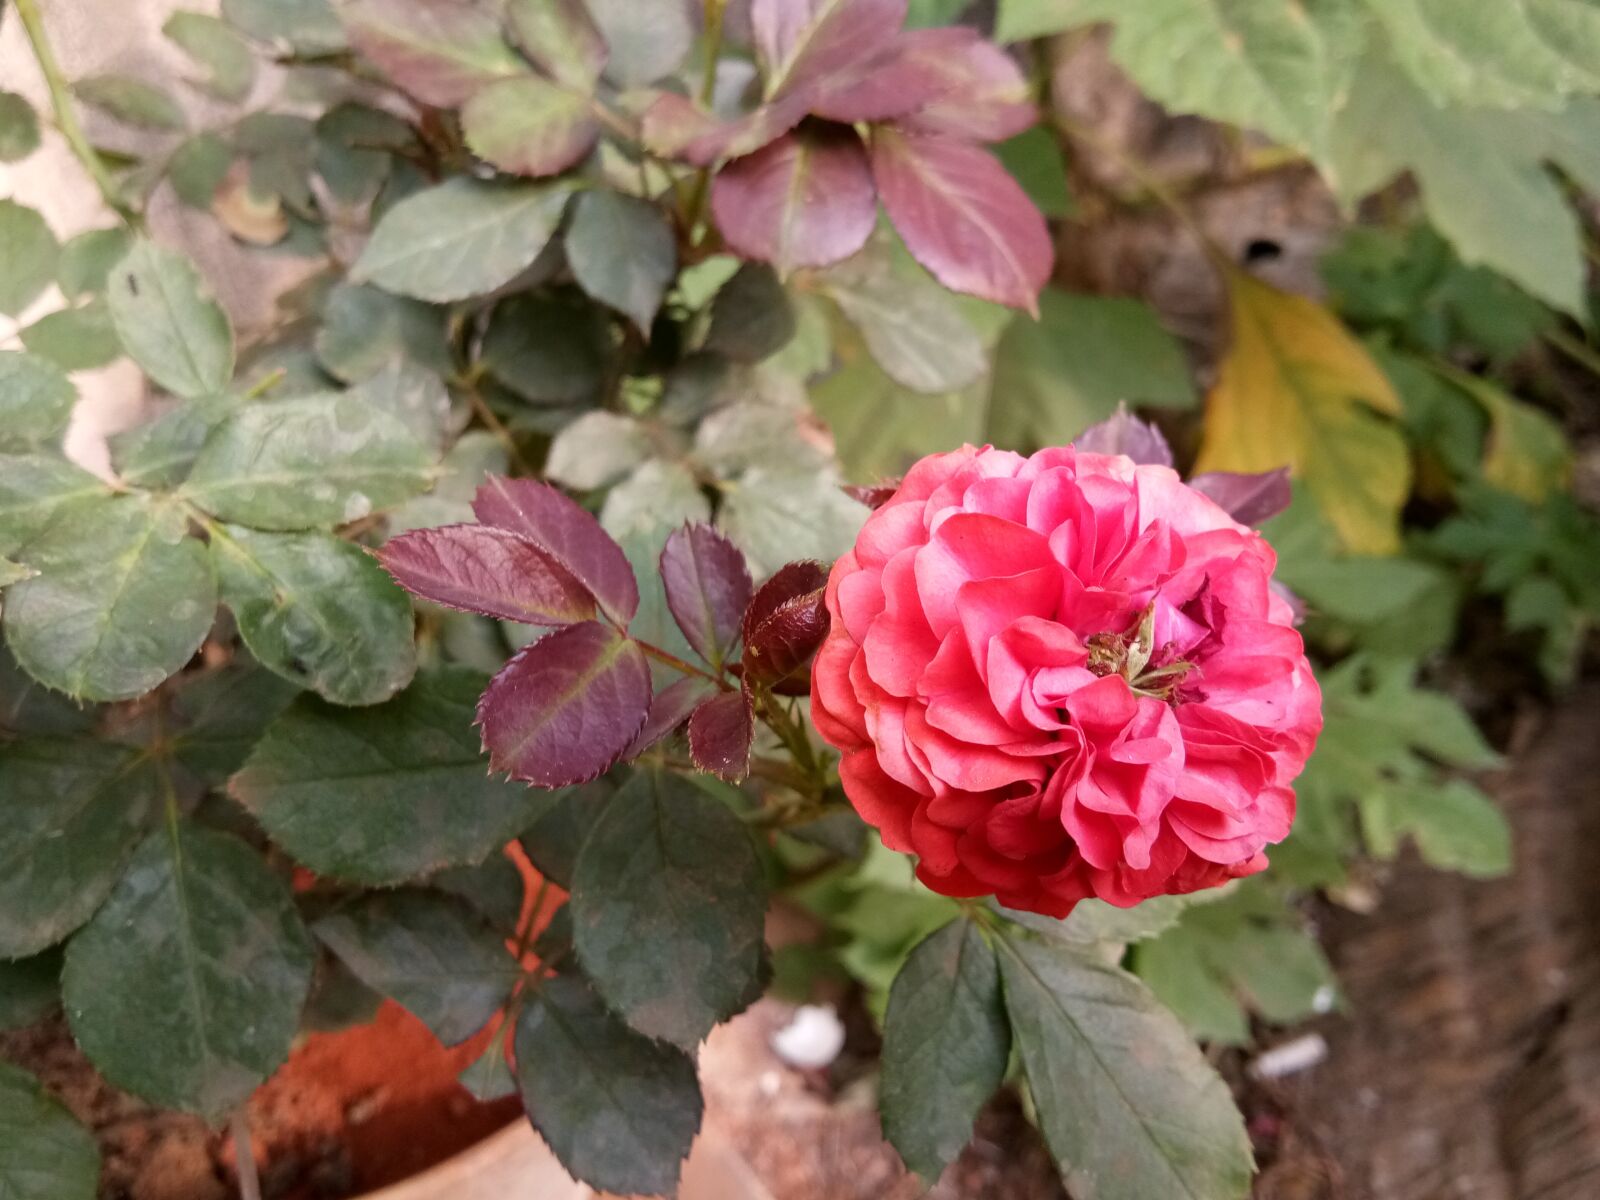 vivo 1601 sample photo. Rose, red rose, garden photography